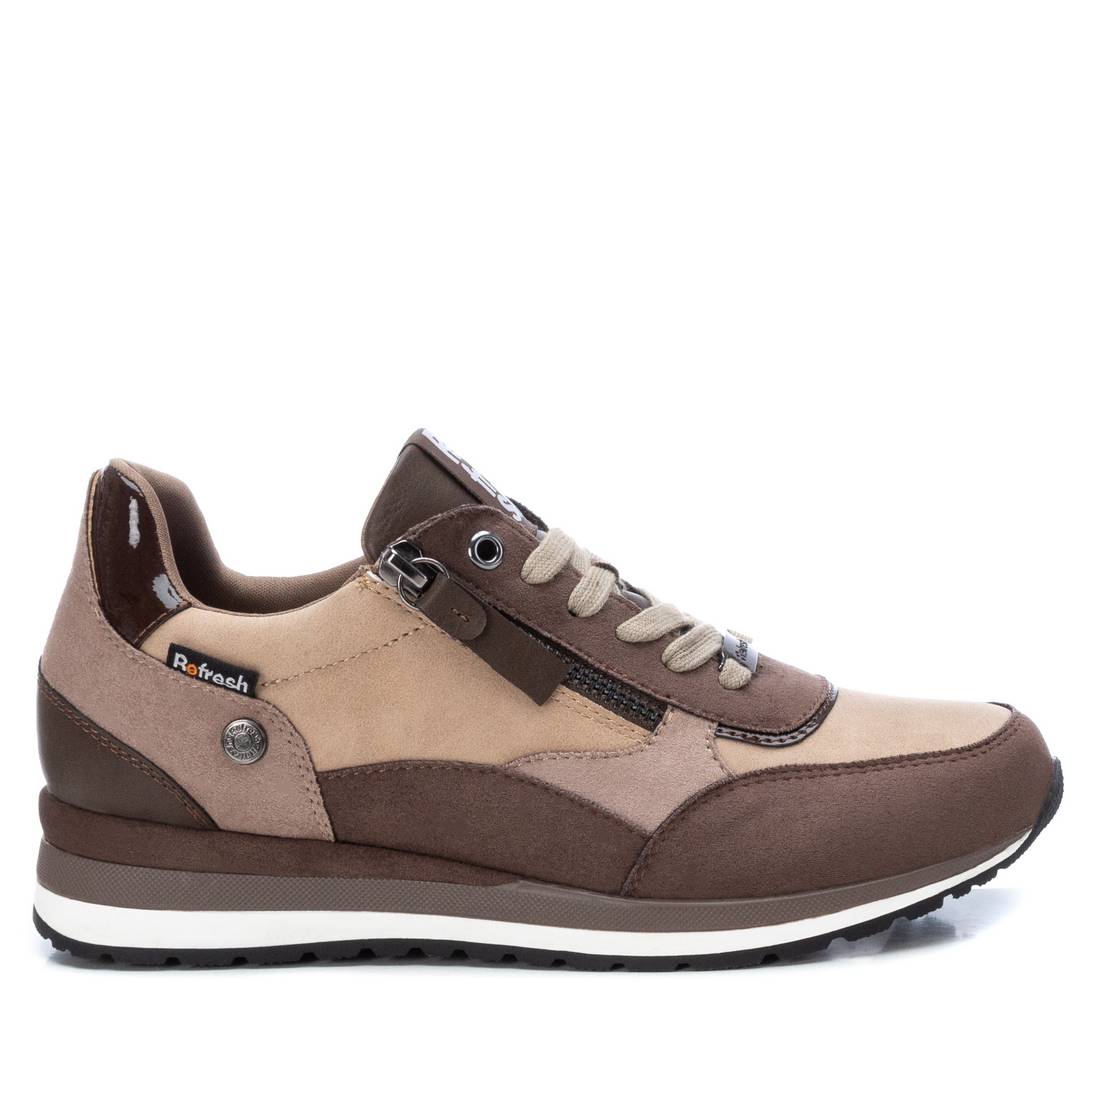 Sneaker Refresh 170133 - marron - 